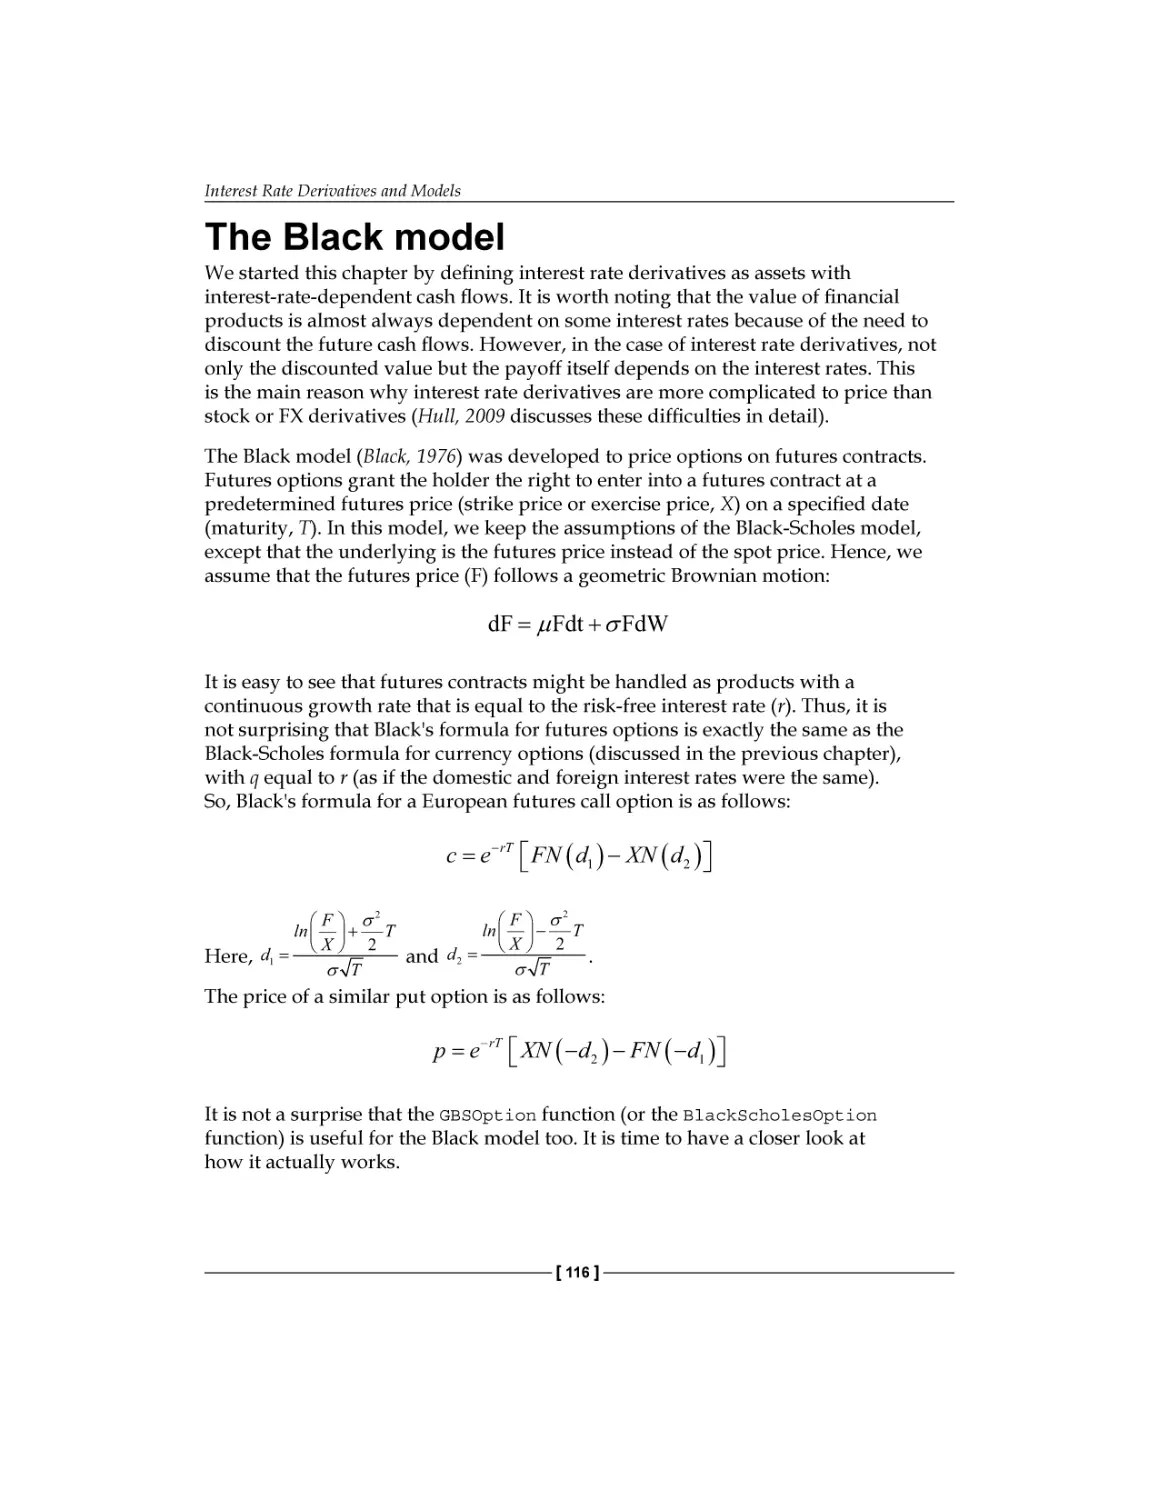 The Black model